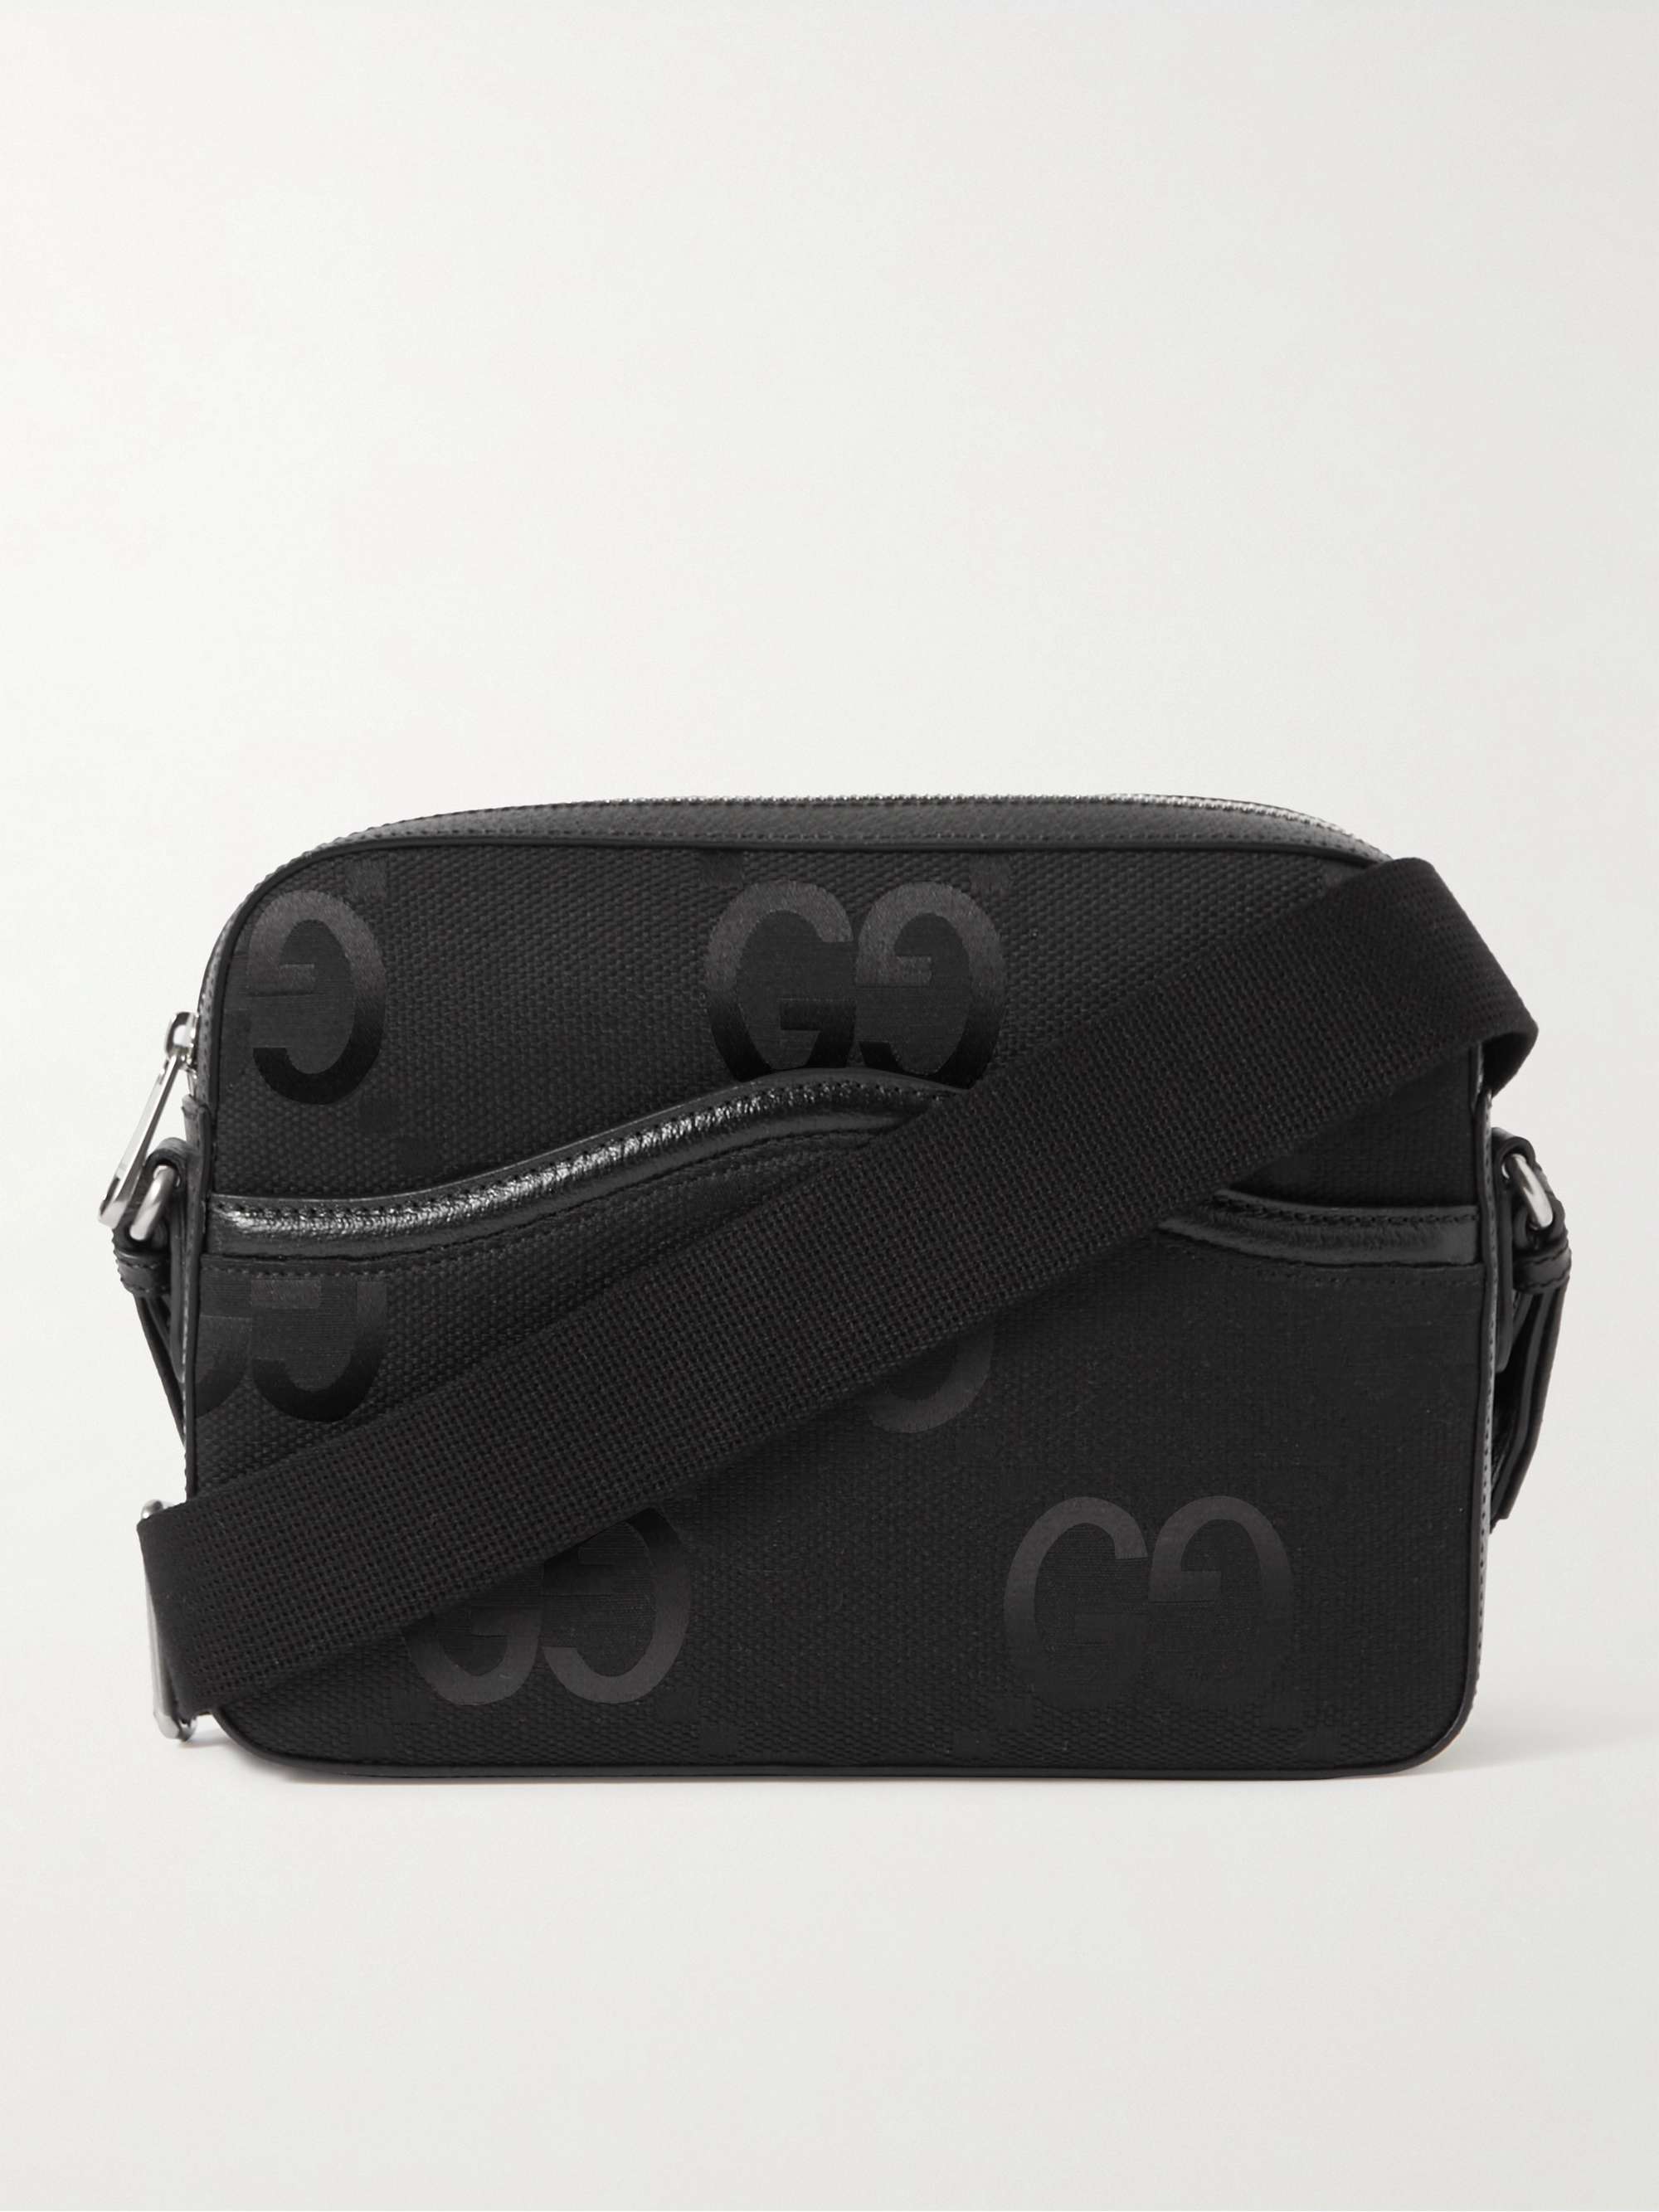 GUCCI GG Rétro Leather-Trimmed Coated-Canvas Messenger Bag for Men